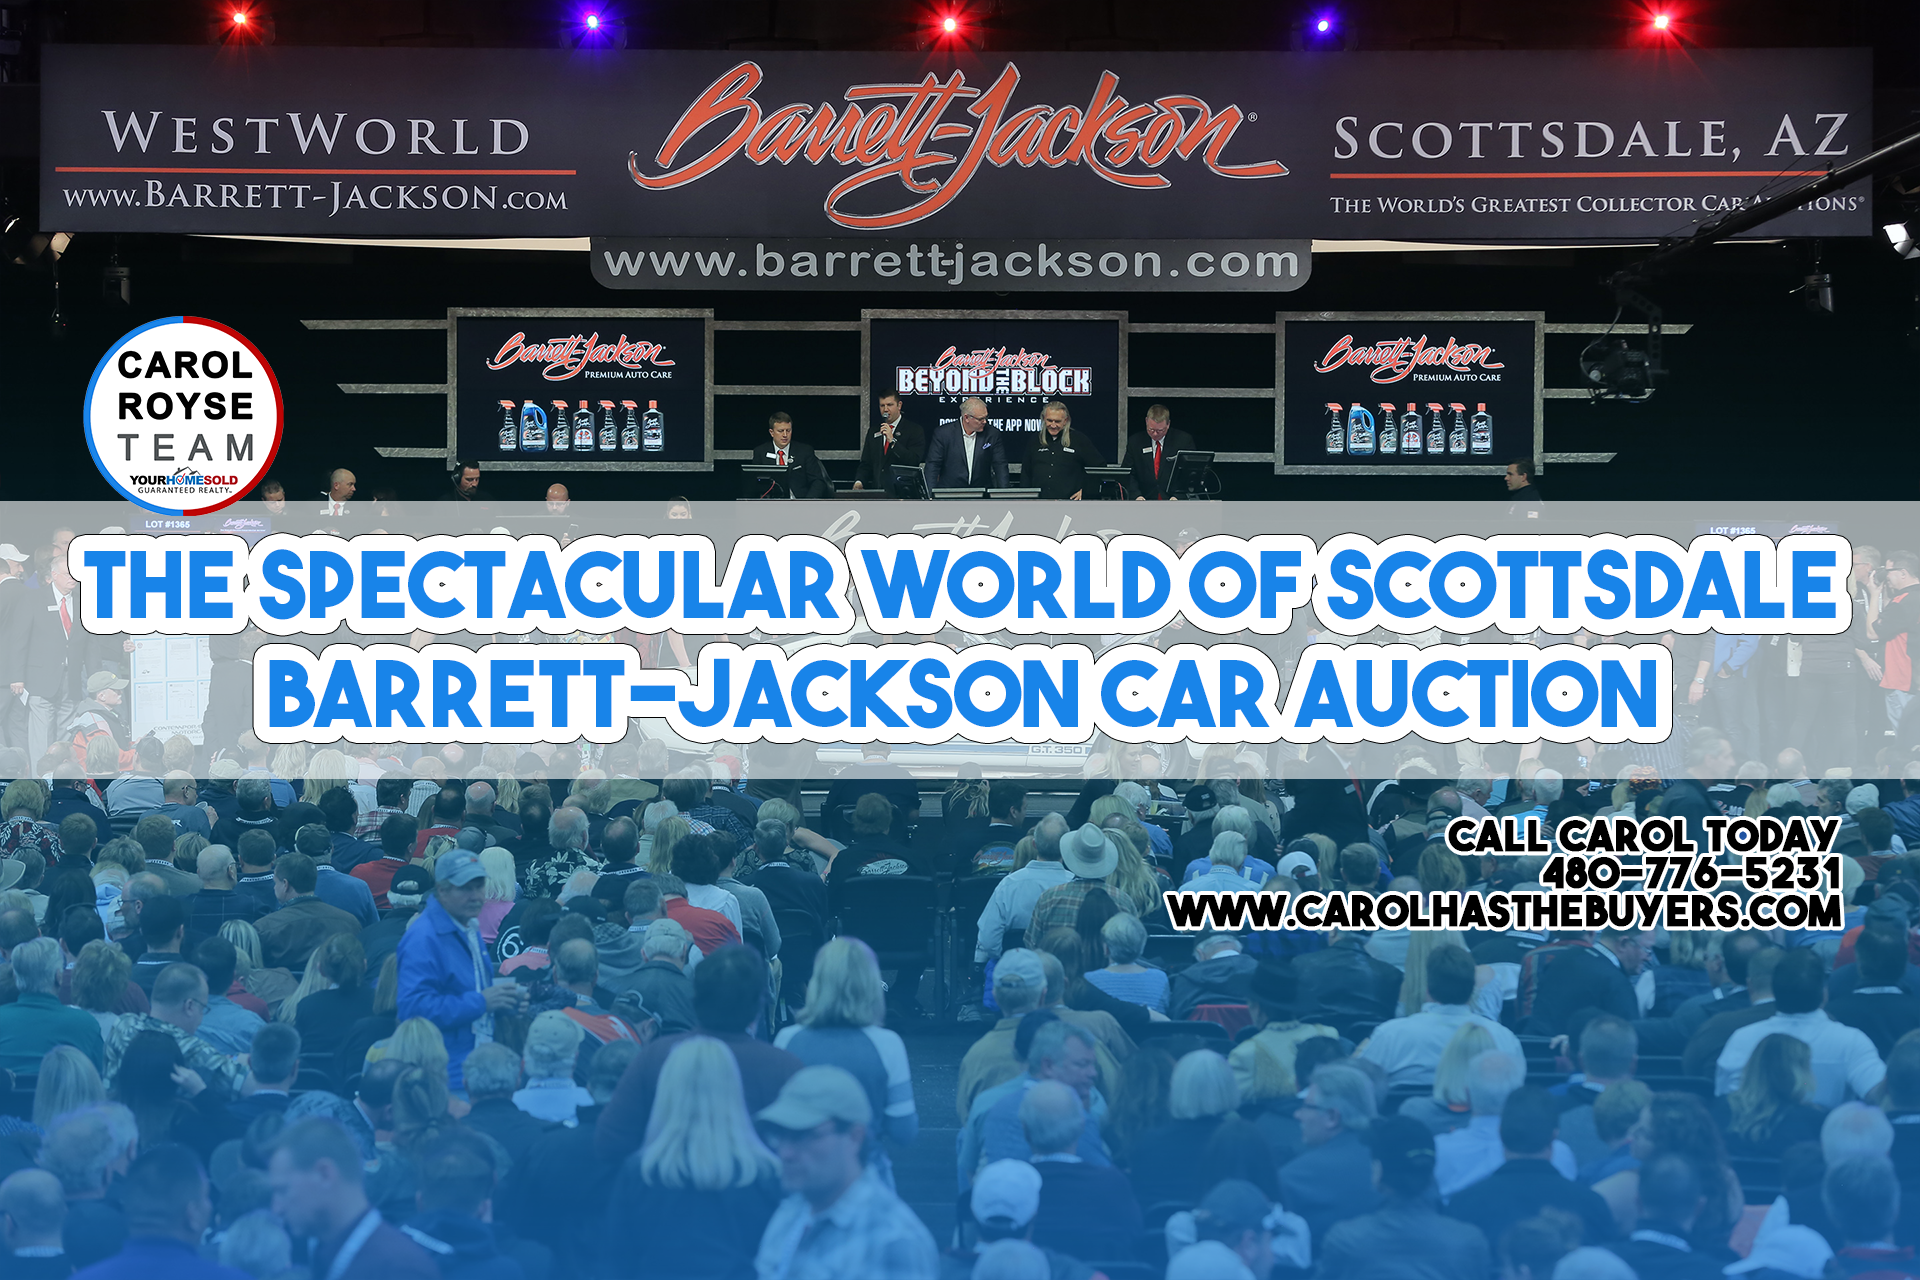 The Spectacular World of Scottsdale Barrett-Jackson Car Auction